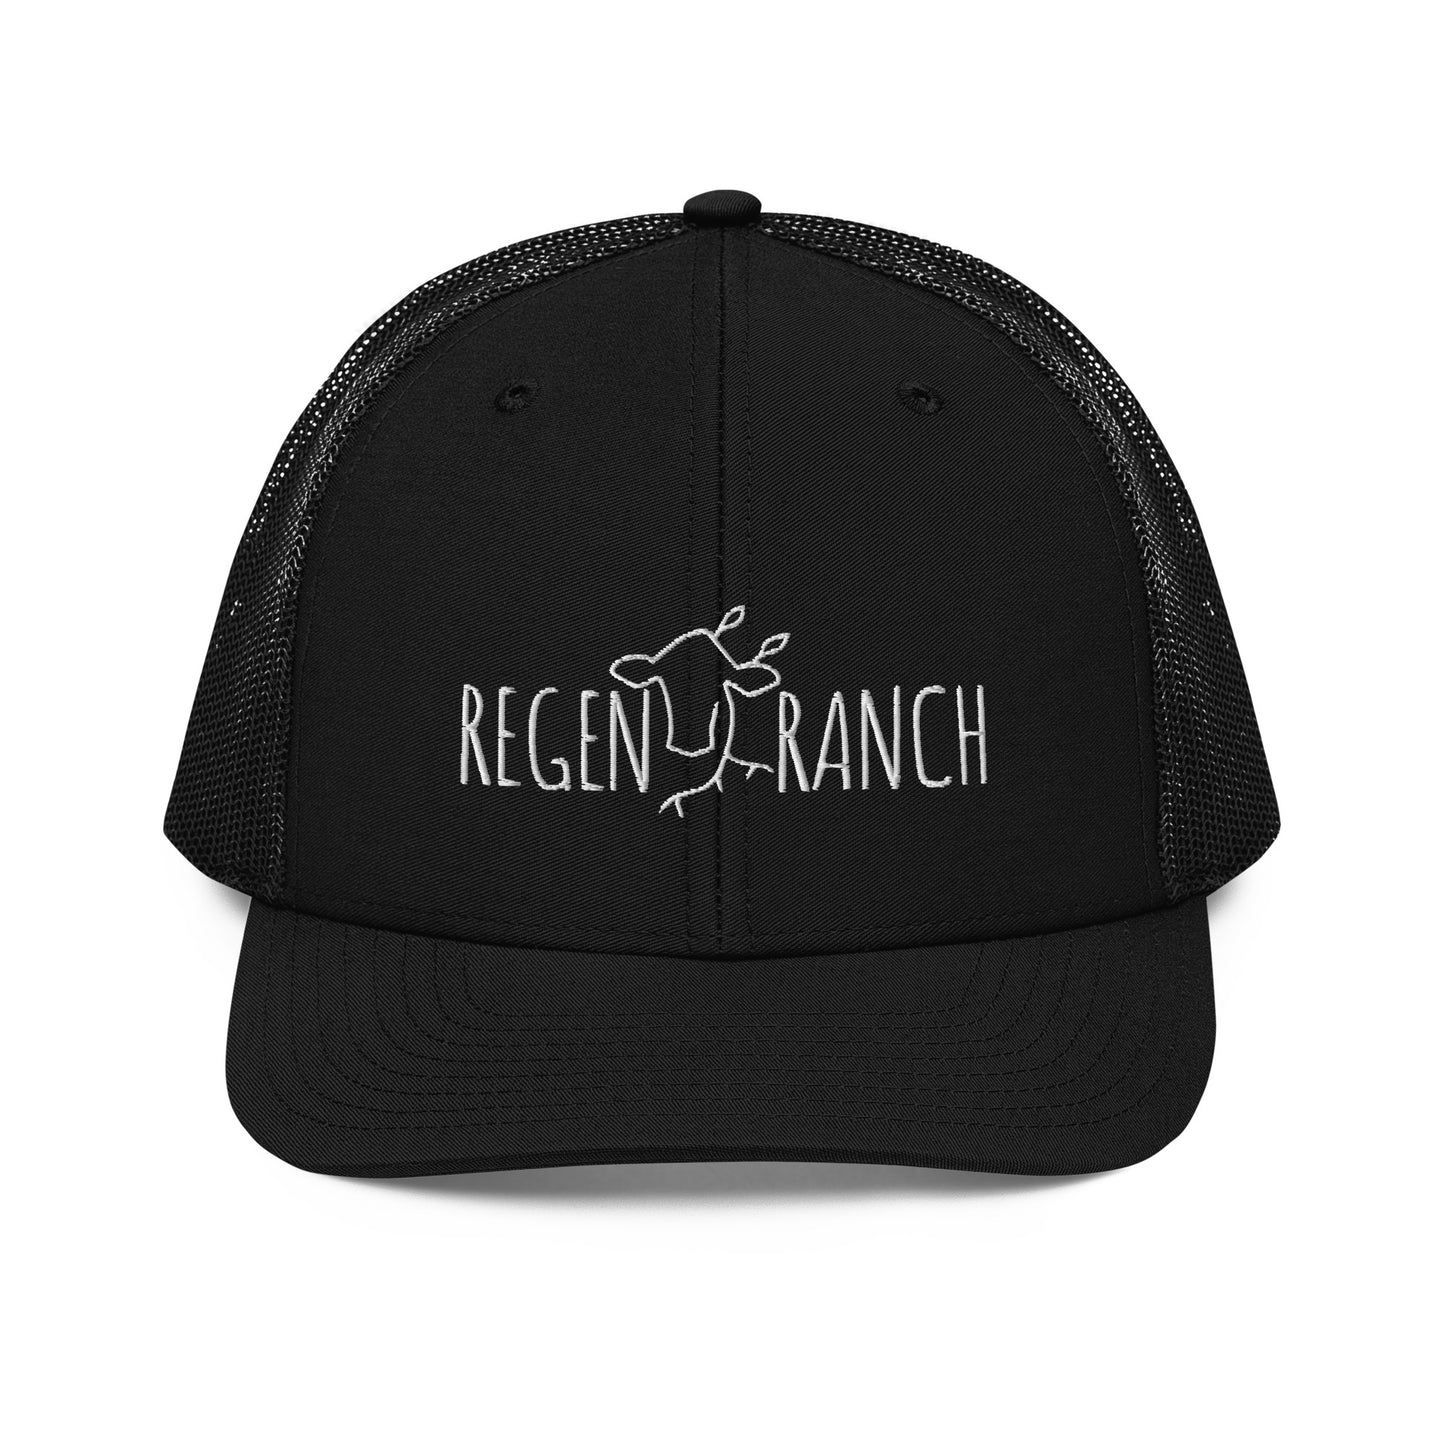 ReGen Ranch Embroidered Trucker Cap